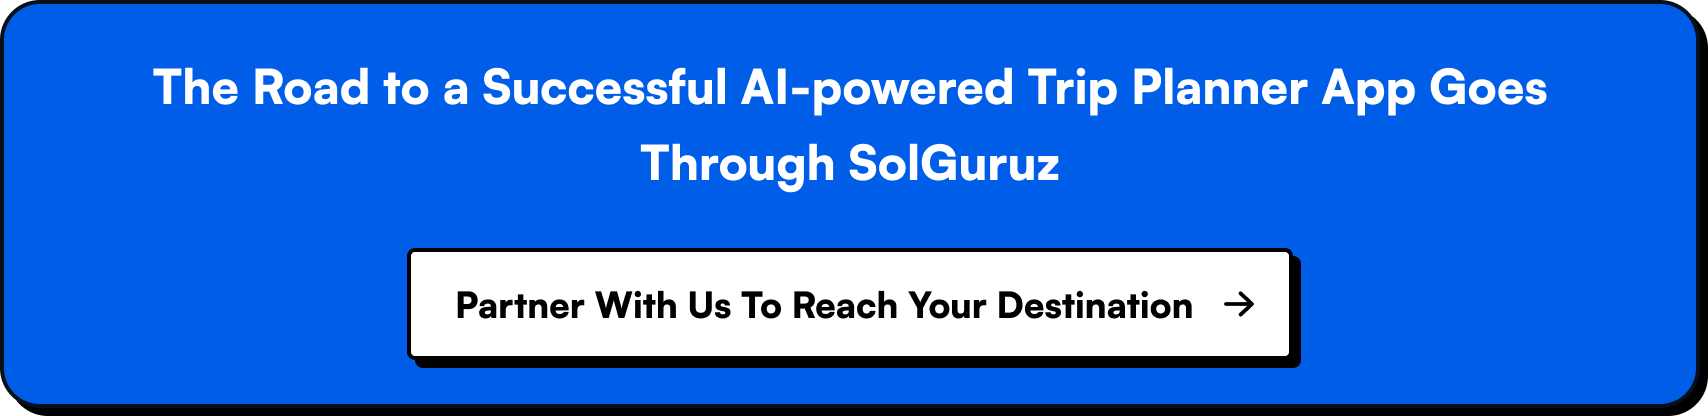 The Road to a Successful AI-powered Trip Planner App Goes Through SolGuruz